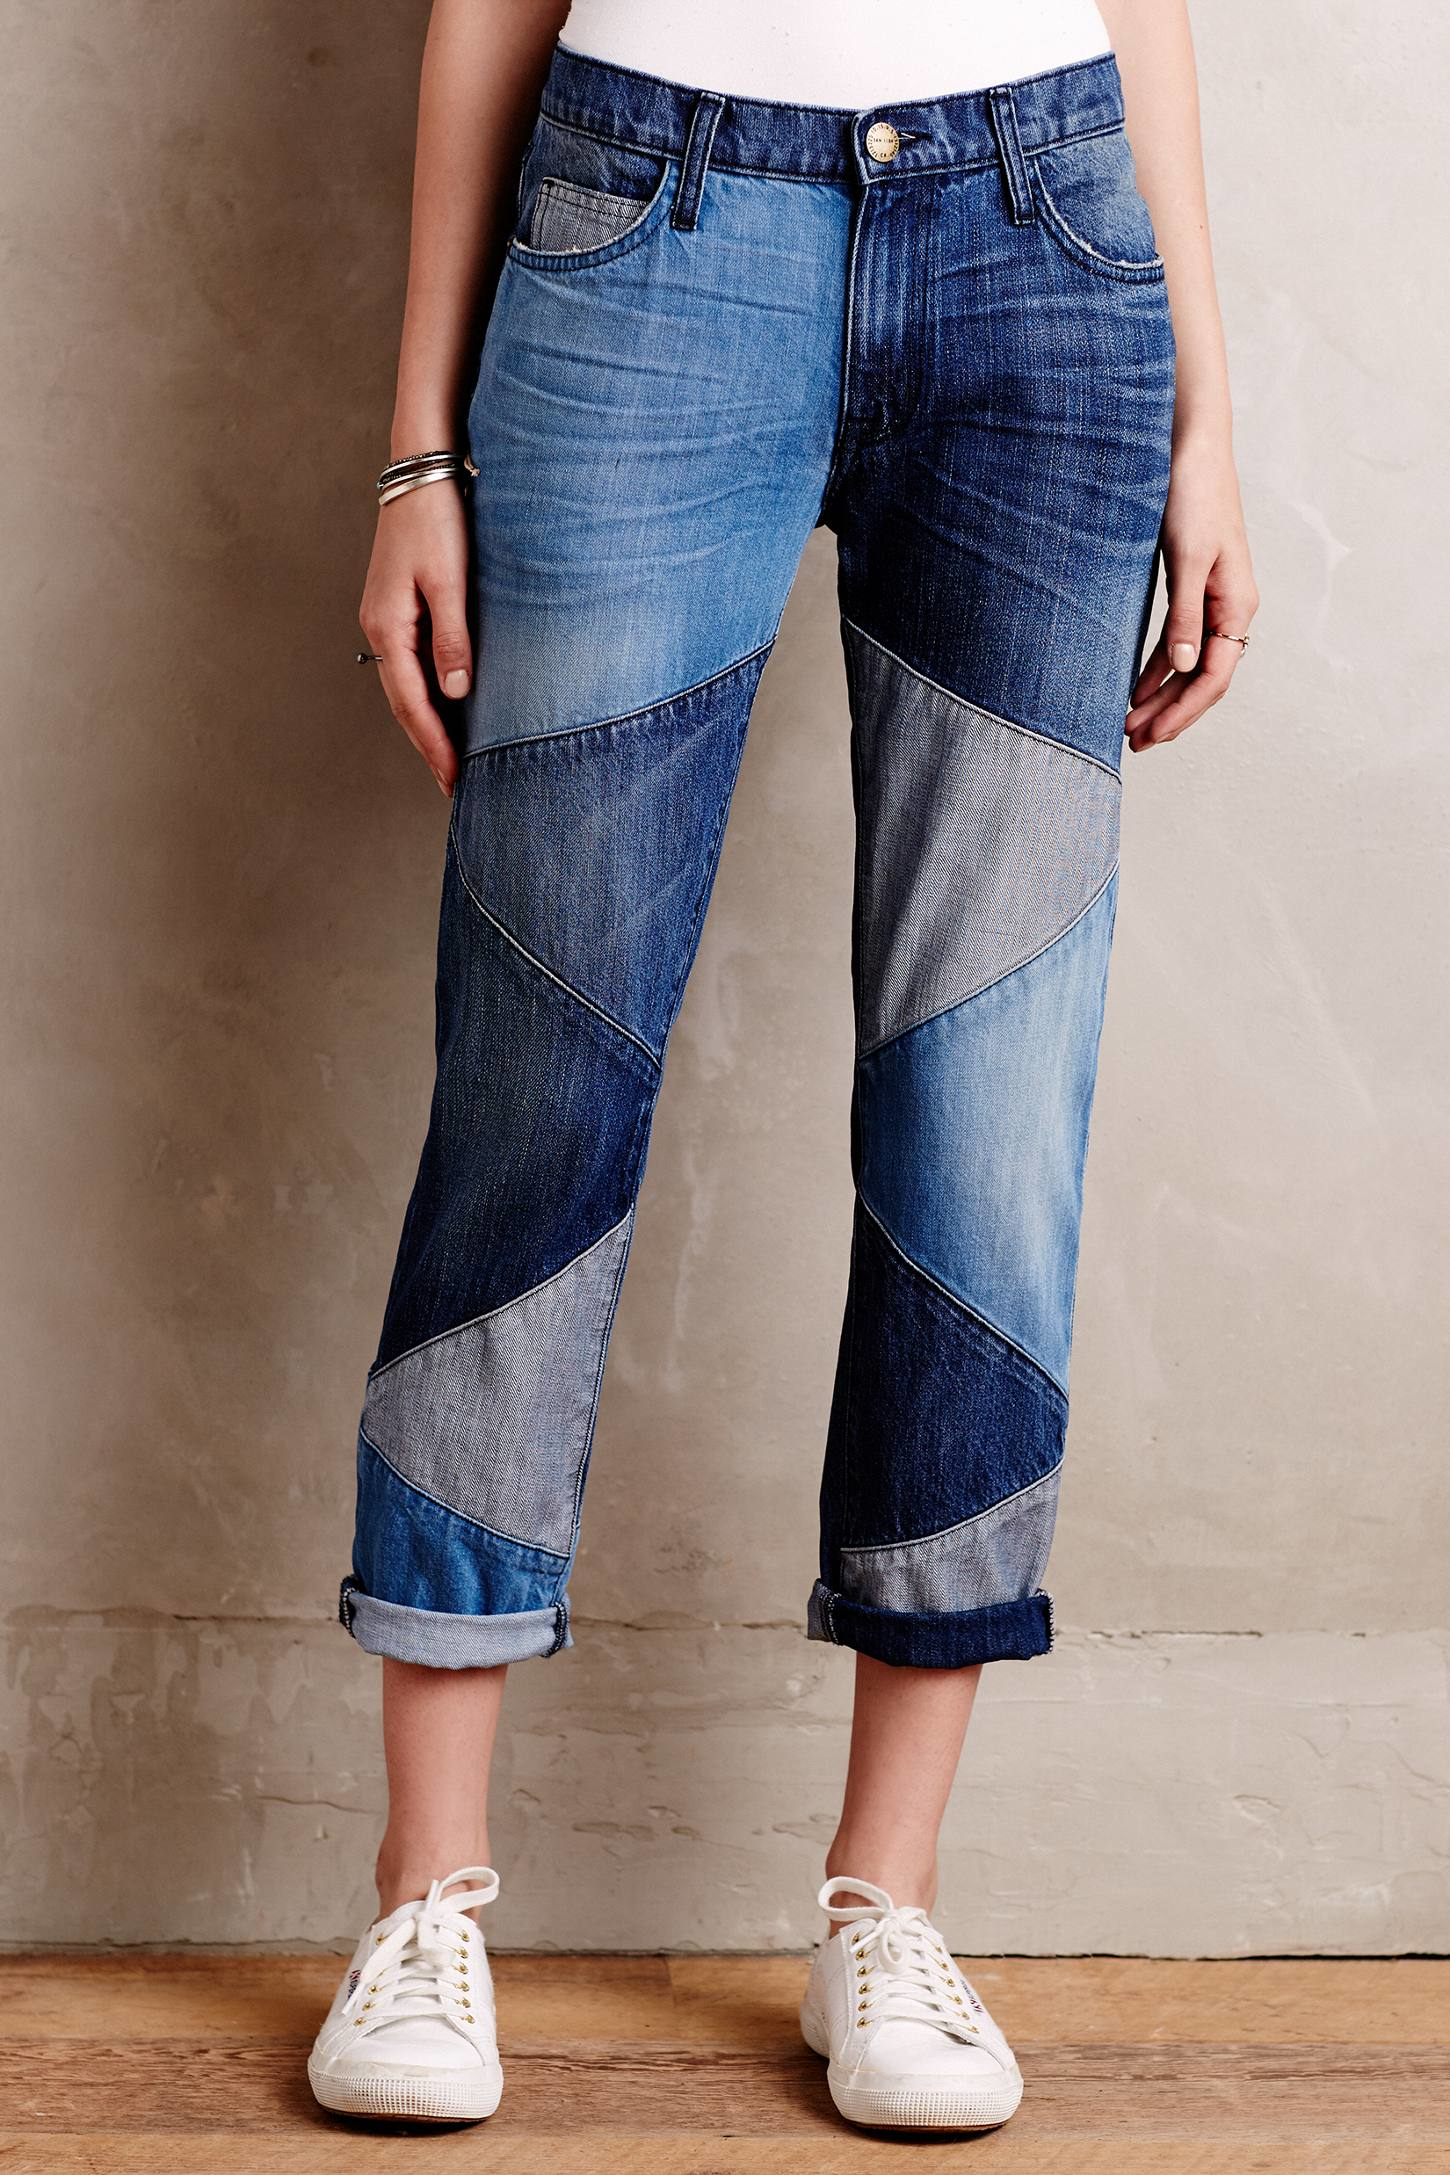 Lyst - Current/elliott Fling Patchwork Jeans in Blue